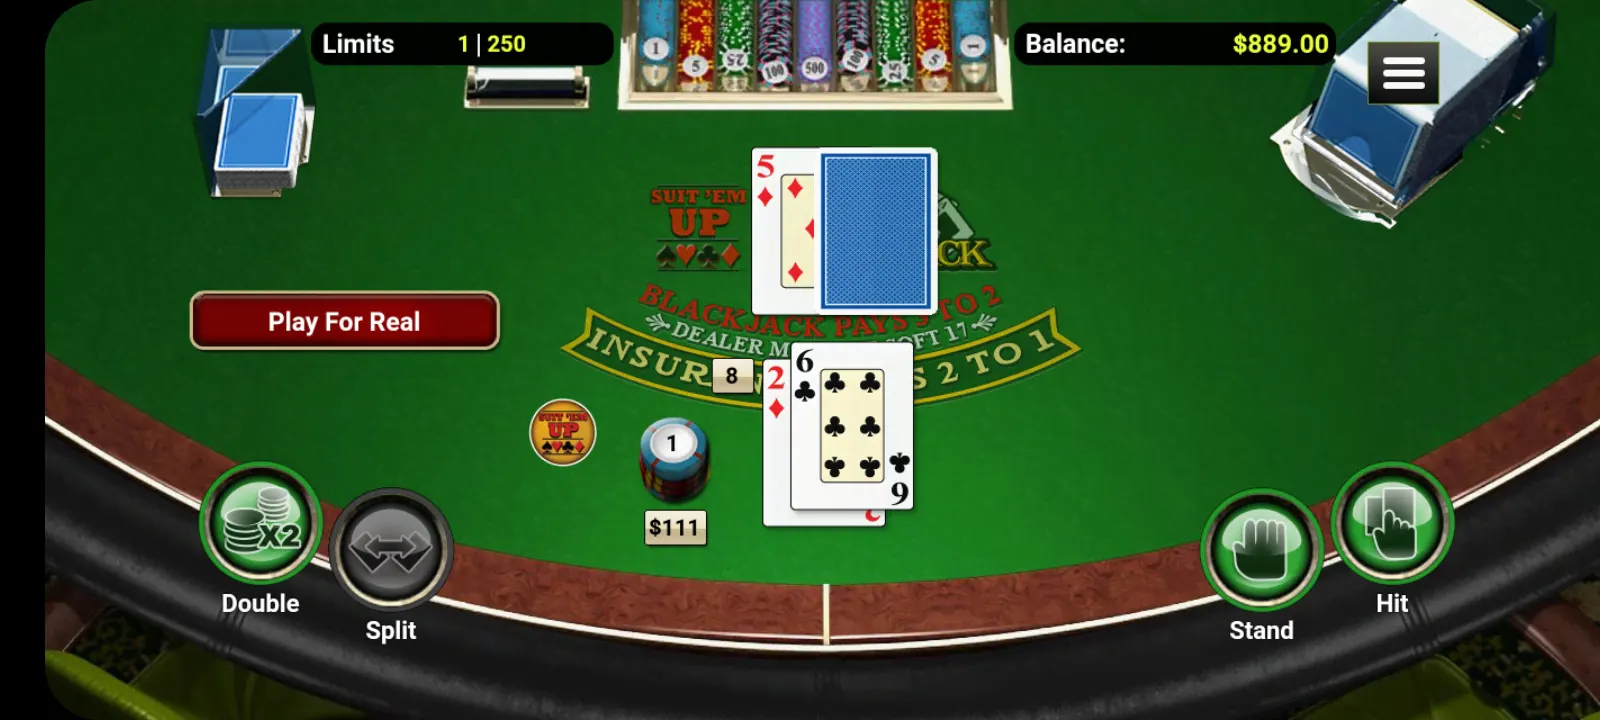 BoVegas casino app screenshot 4